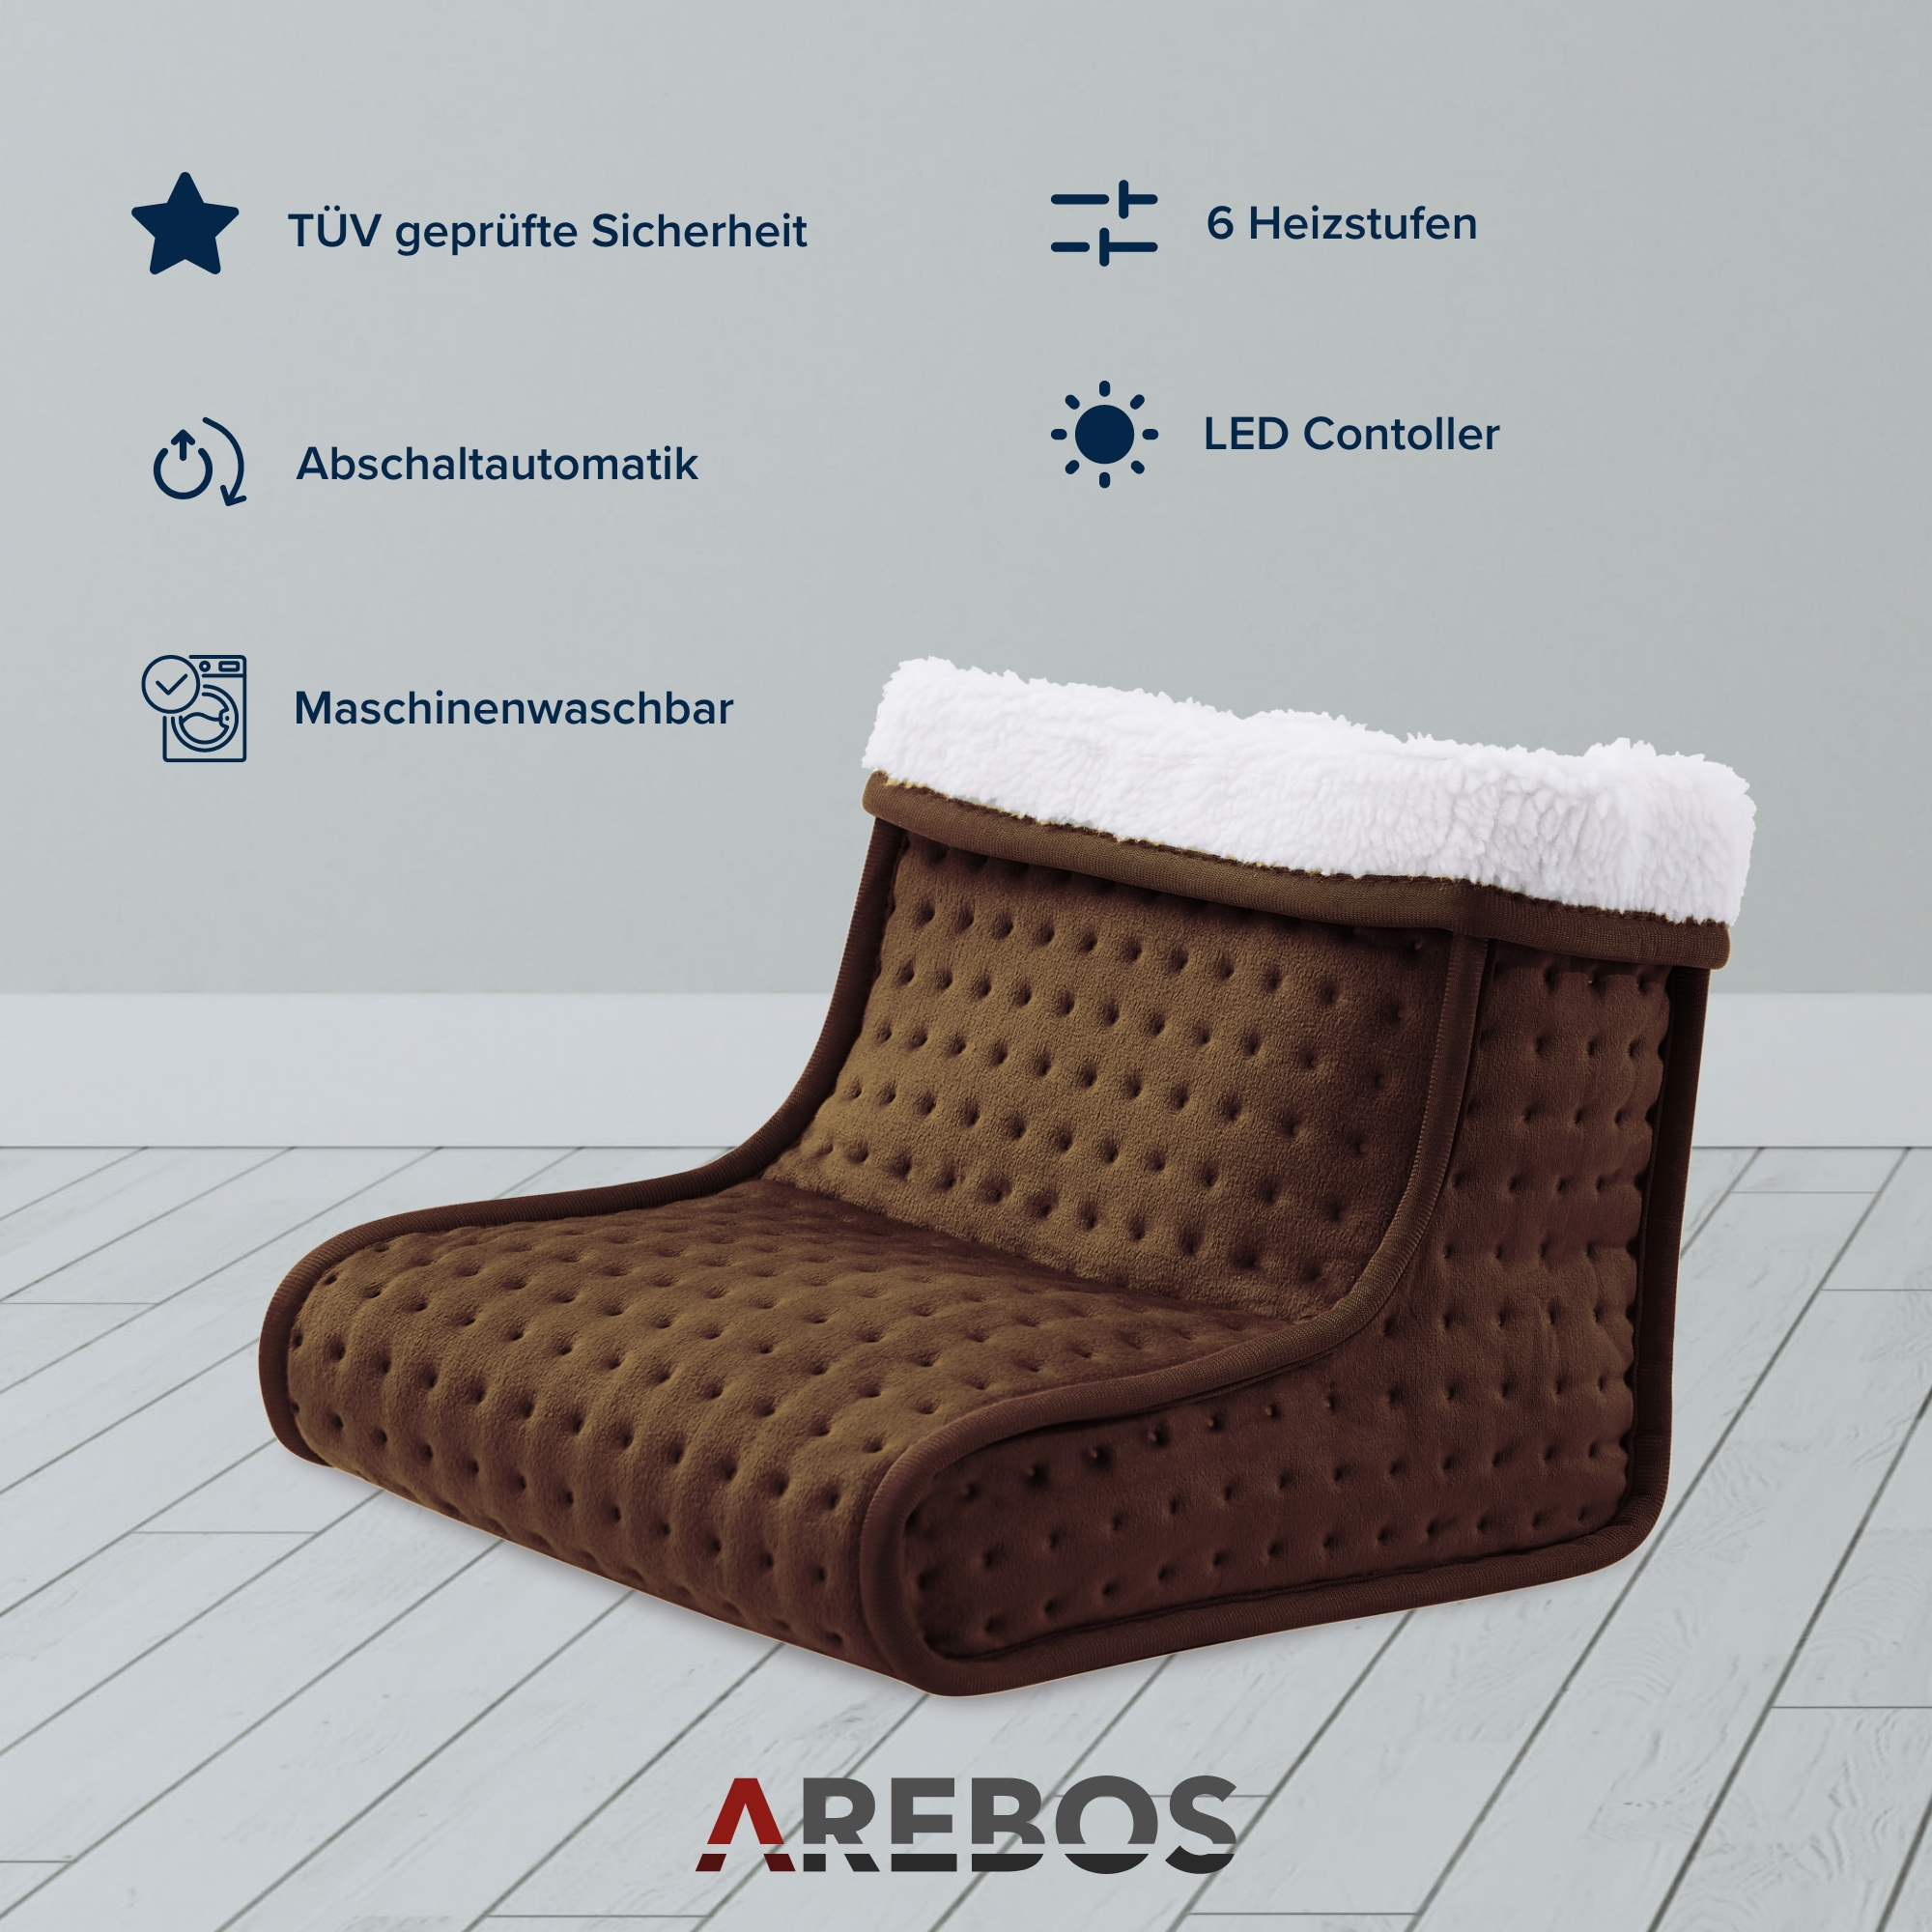 Fußwärmer AREBOS & LED | Fernbedienung inkl. - Abschaltautomatik Überhitzungsschutz